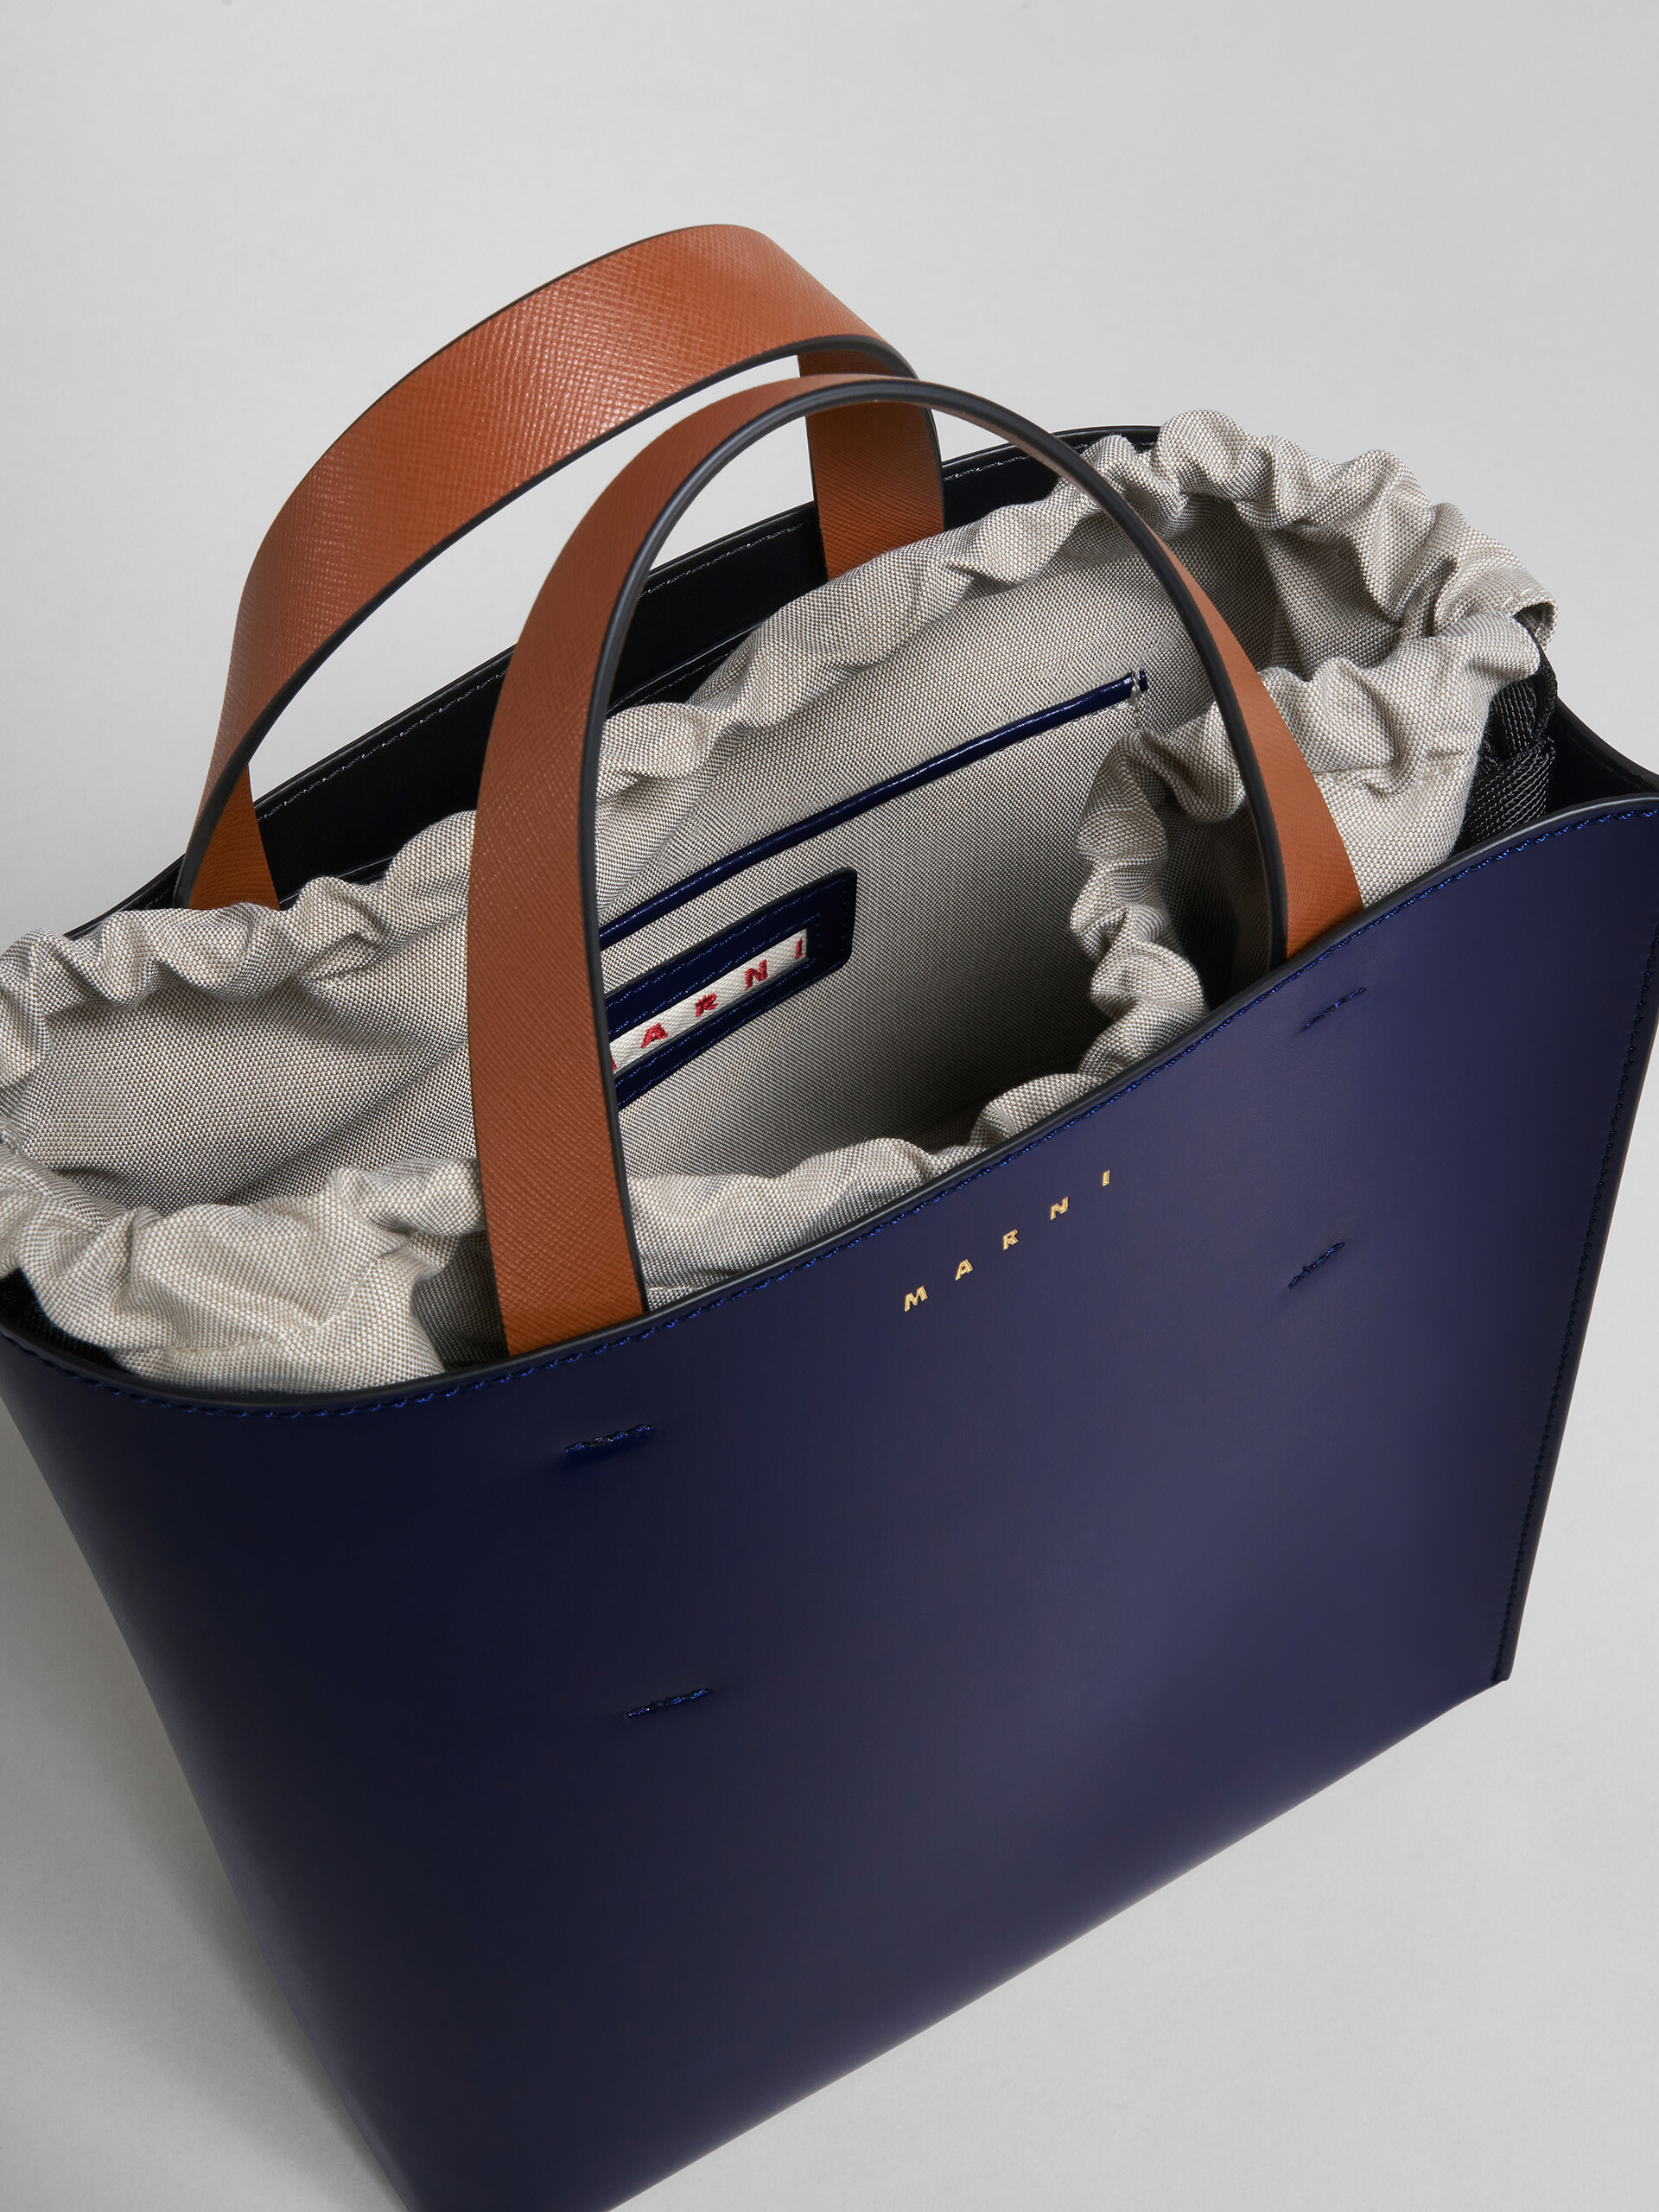 Petit sac MUSEO en cuir bleu et blanc - Sacs cabas - Image 4